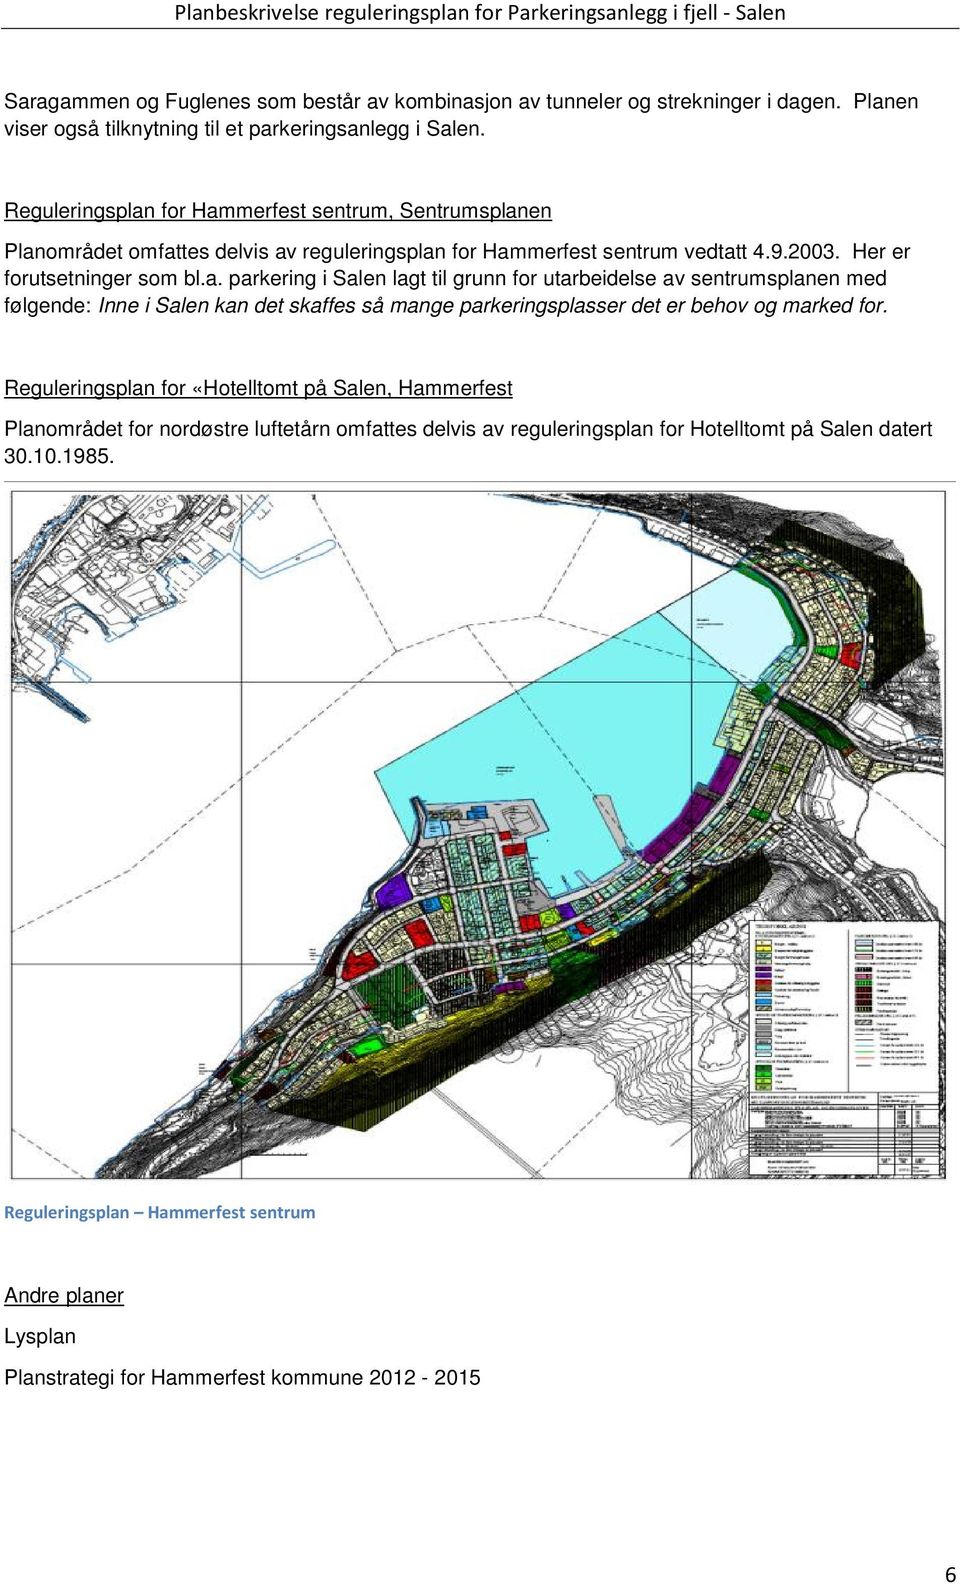 Reguleringsplan for «Hotelltomt på Salen, Hammerfest Planområdet for nordøstre luftetårn omfattes delvis av reguleringsplan for Hotelltomt på Salen datert 30.10.1985.